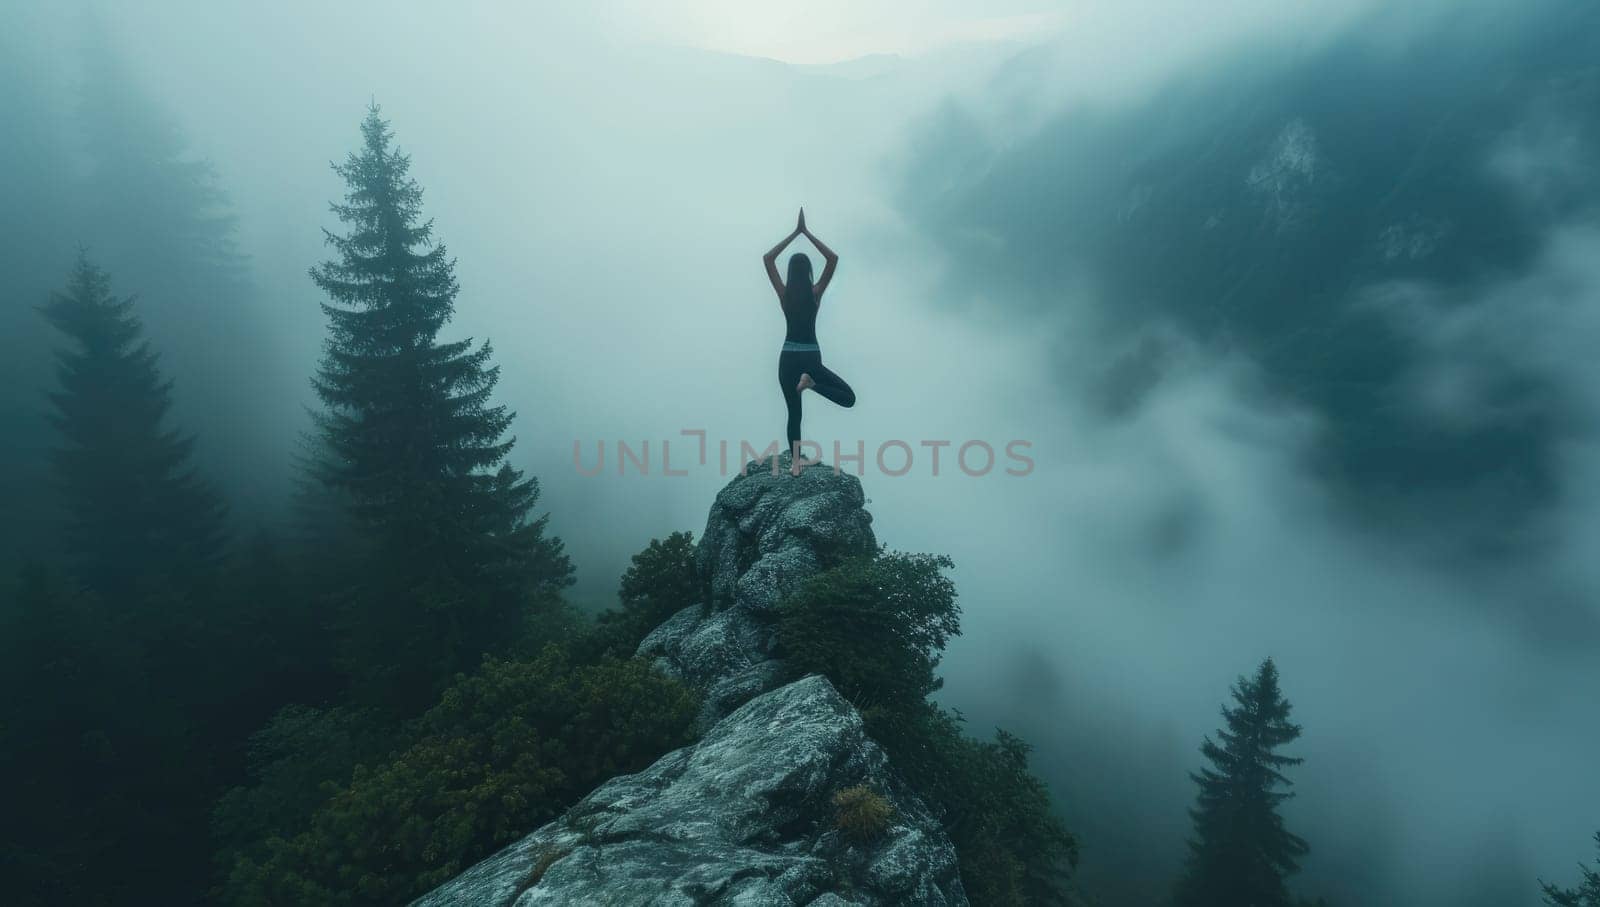 Silhouette of Woman Practicing Yoga on Misty Mountain Peak